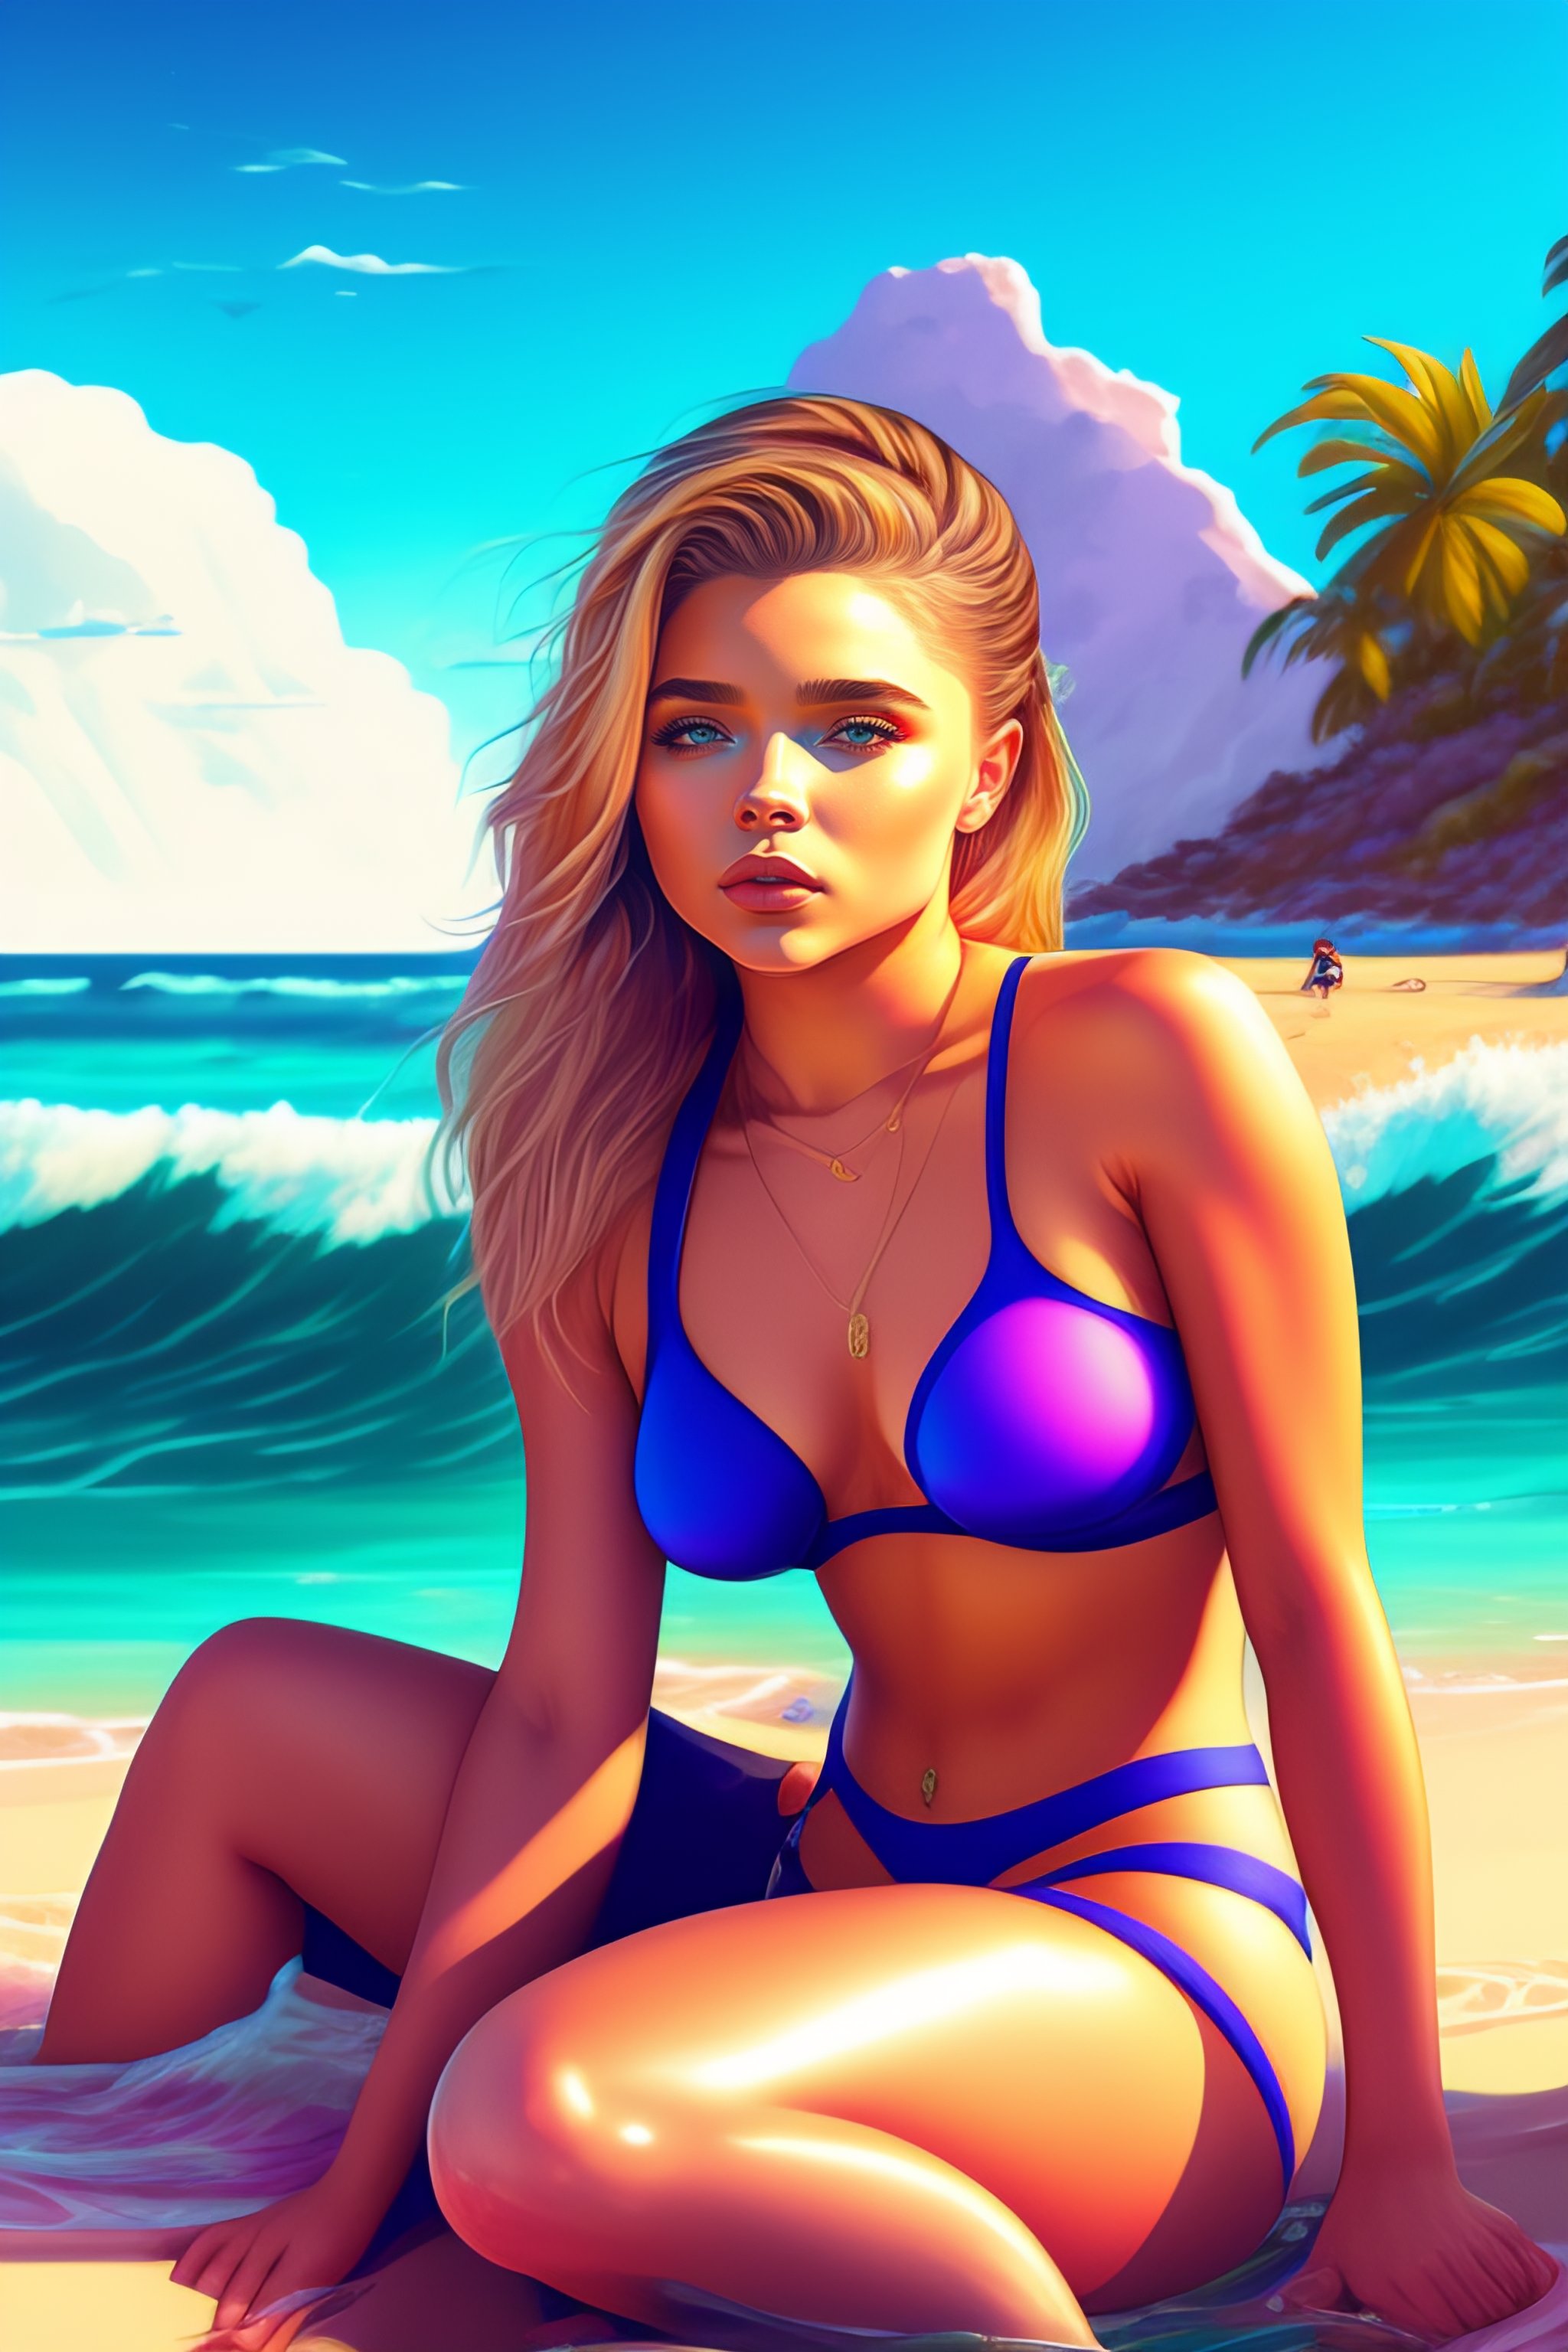 chloe grace moretz in a bikini full body by HighRiseMedia on